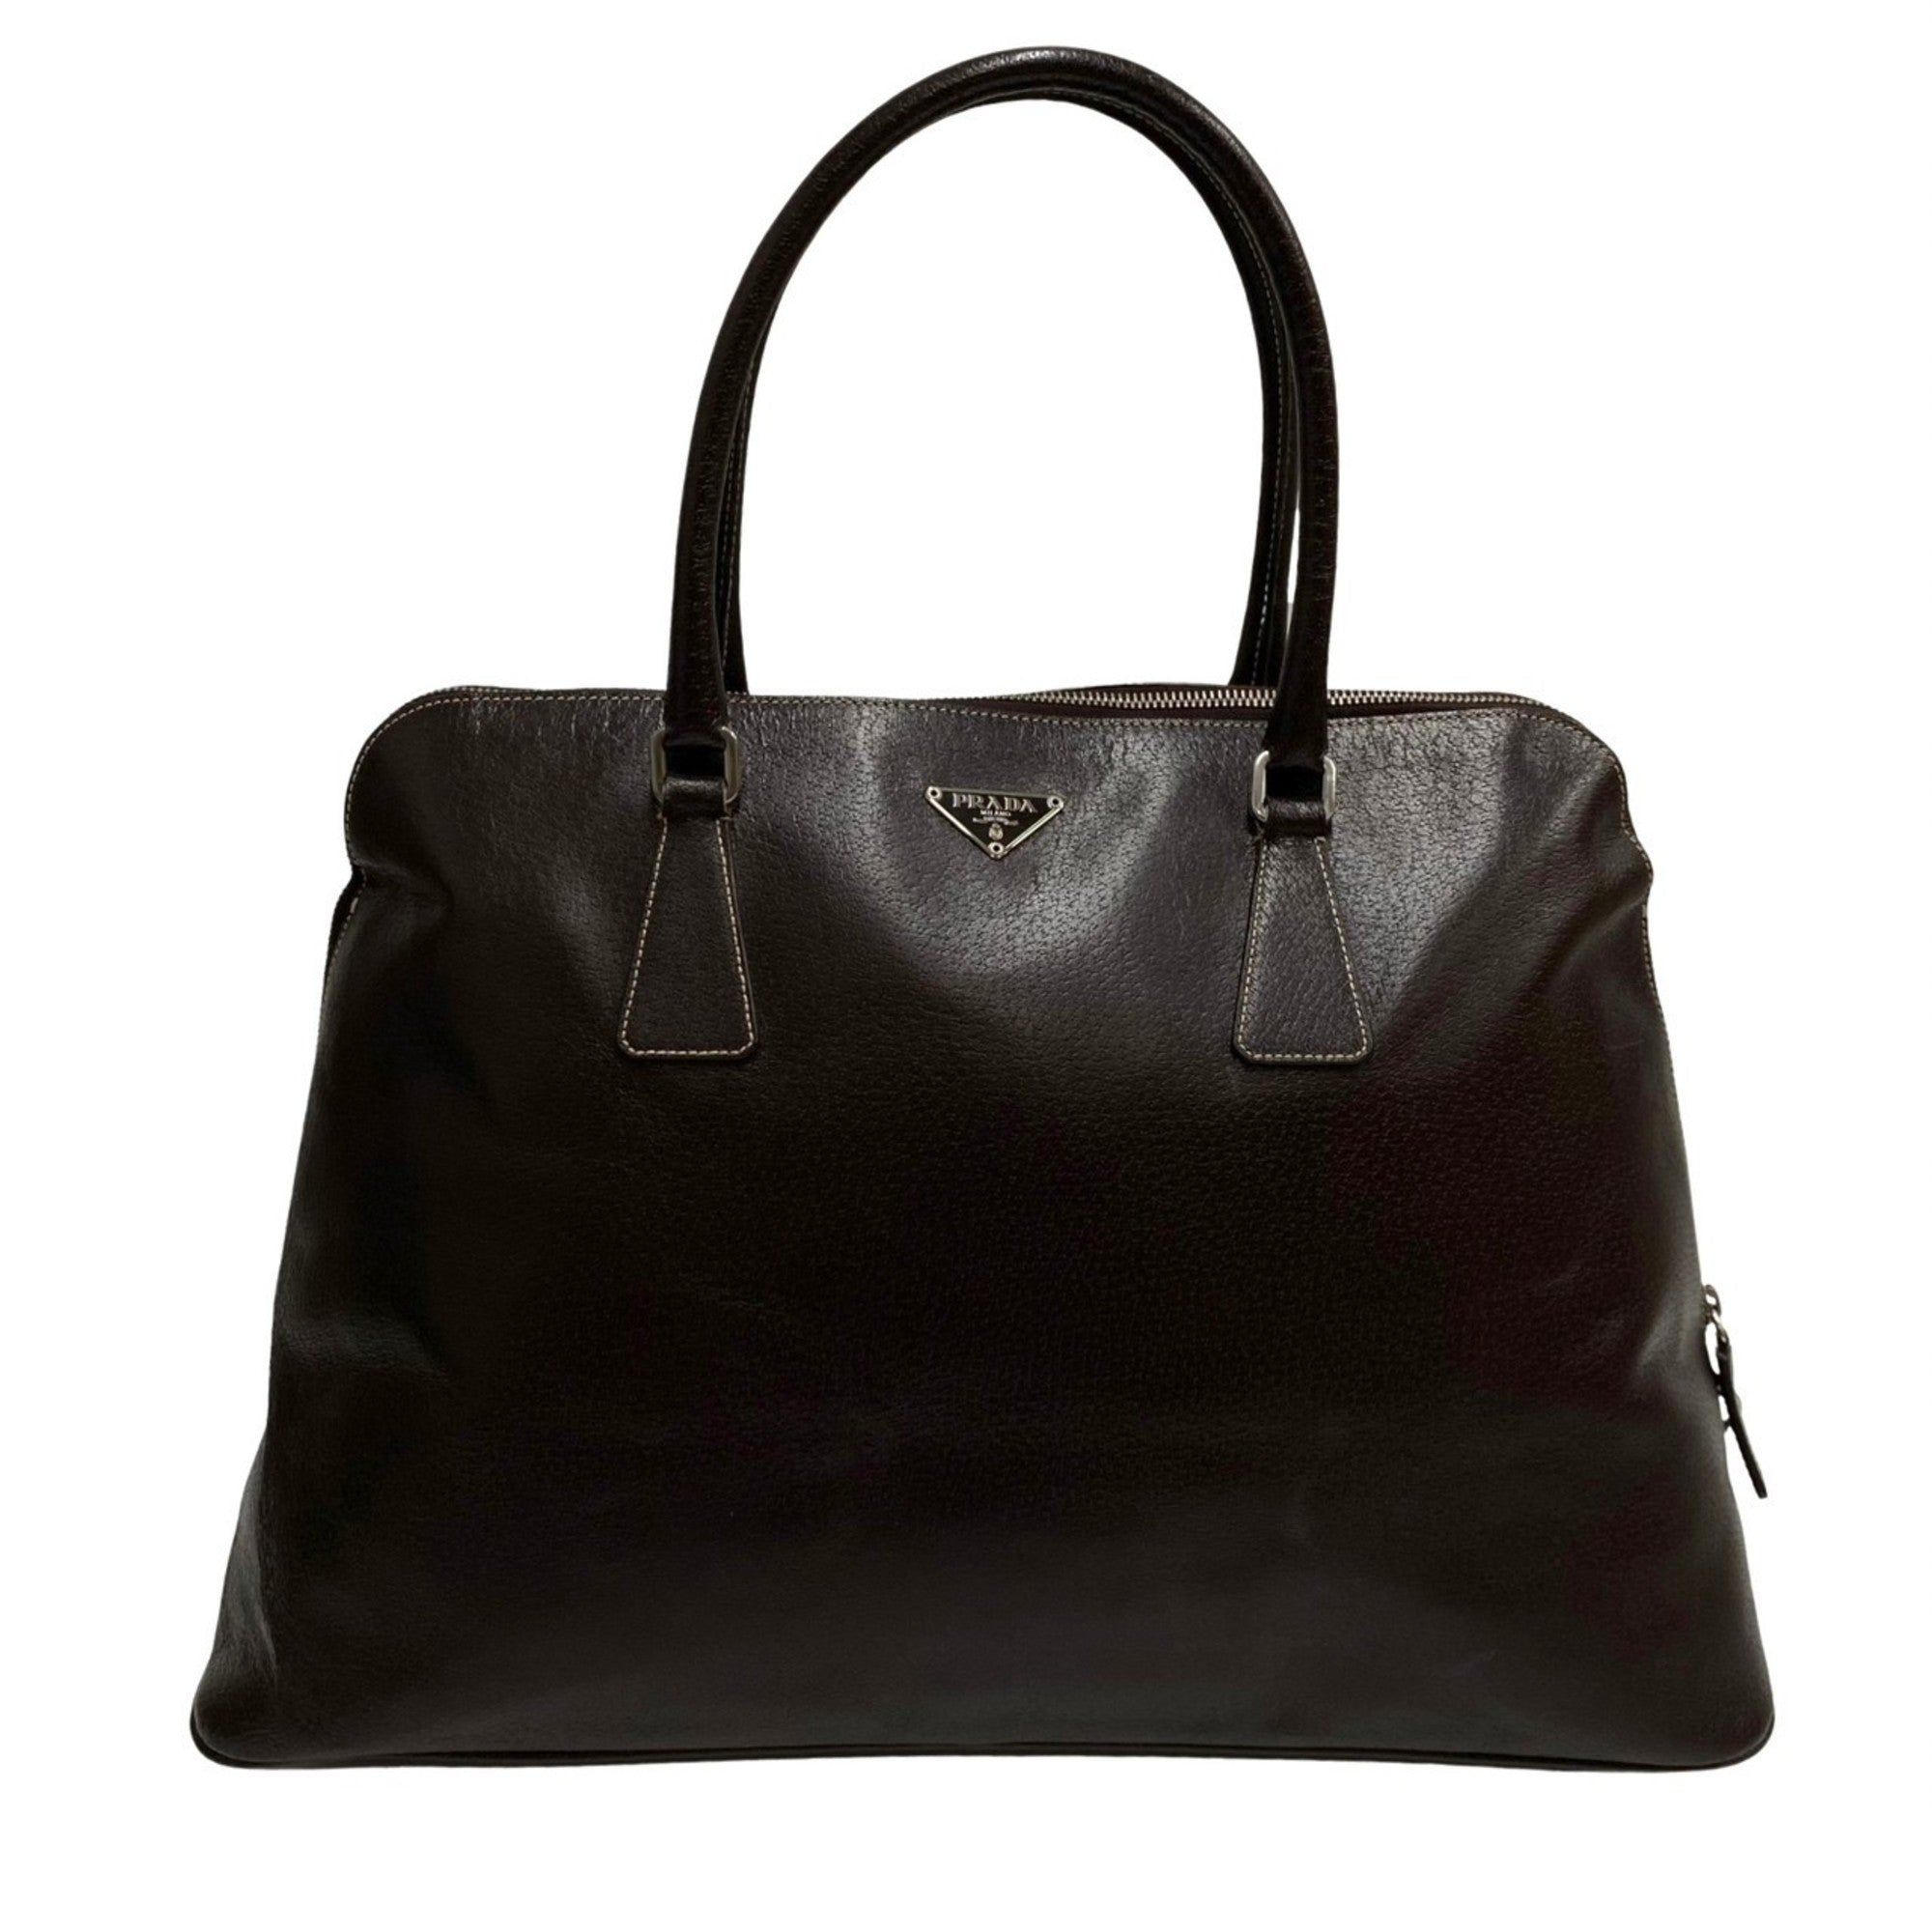 Prada PRADA triangle logo metal fittings leather genuine handbag tote bag mini Boston brown Size ONE SIZE - 1 Preview